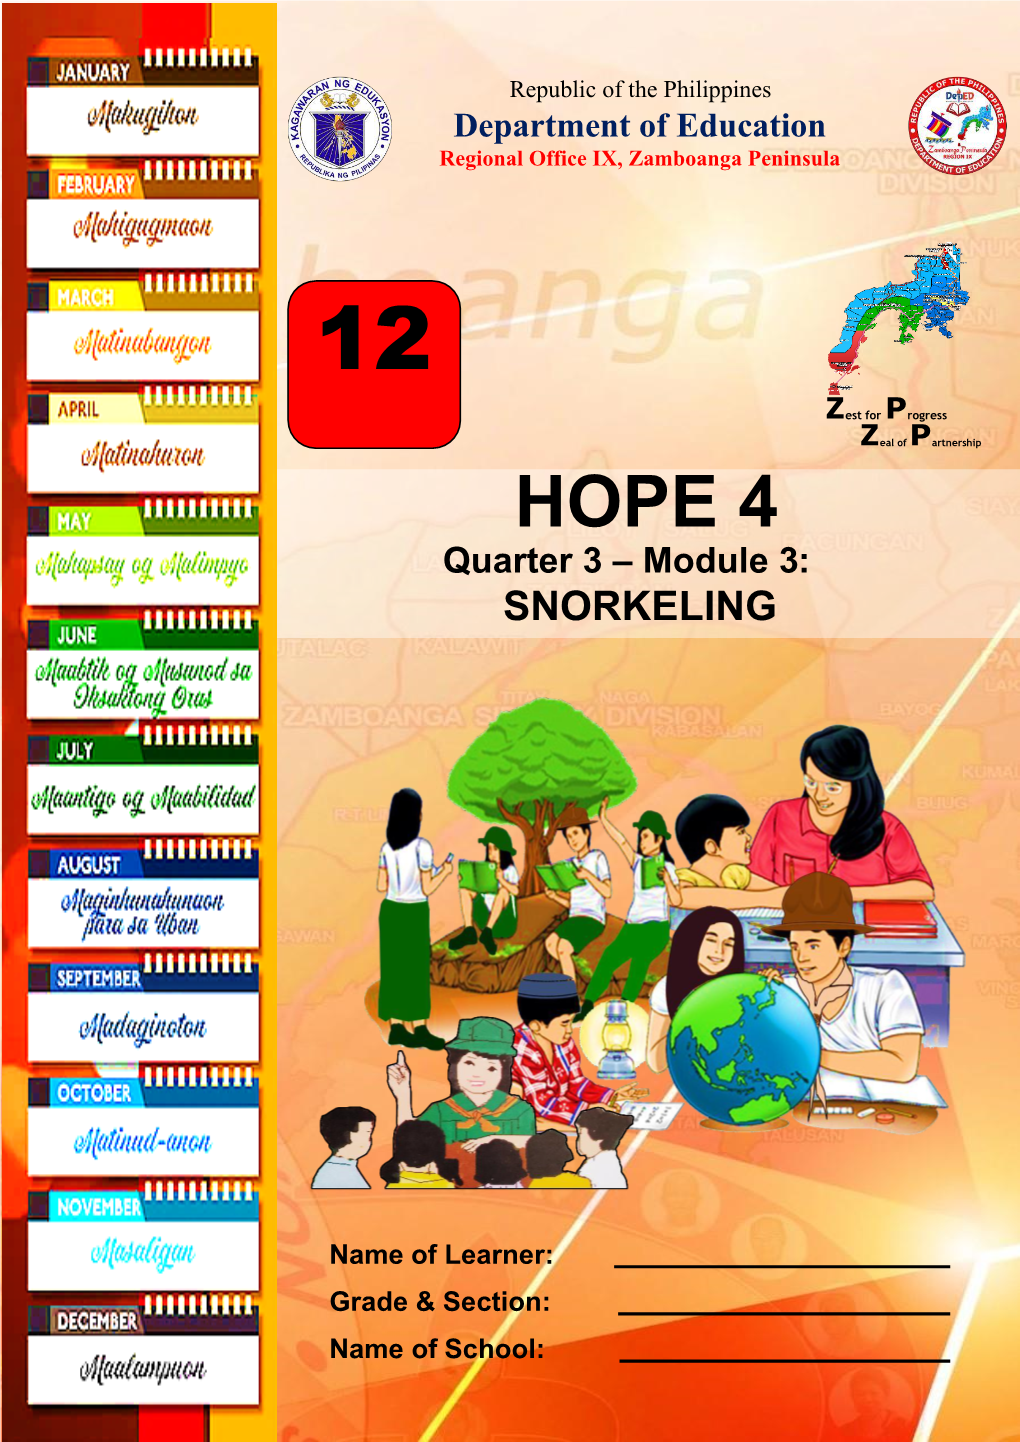 HOPE 4 Quarter 3 – Module 3: SNORKELING